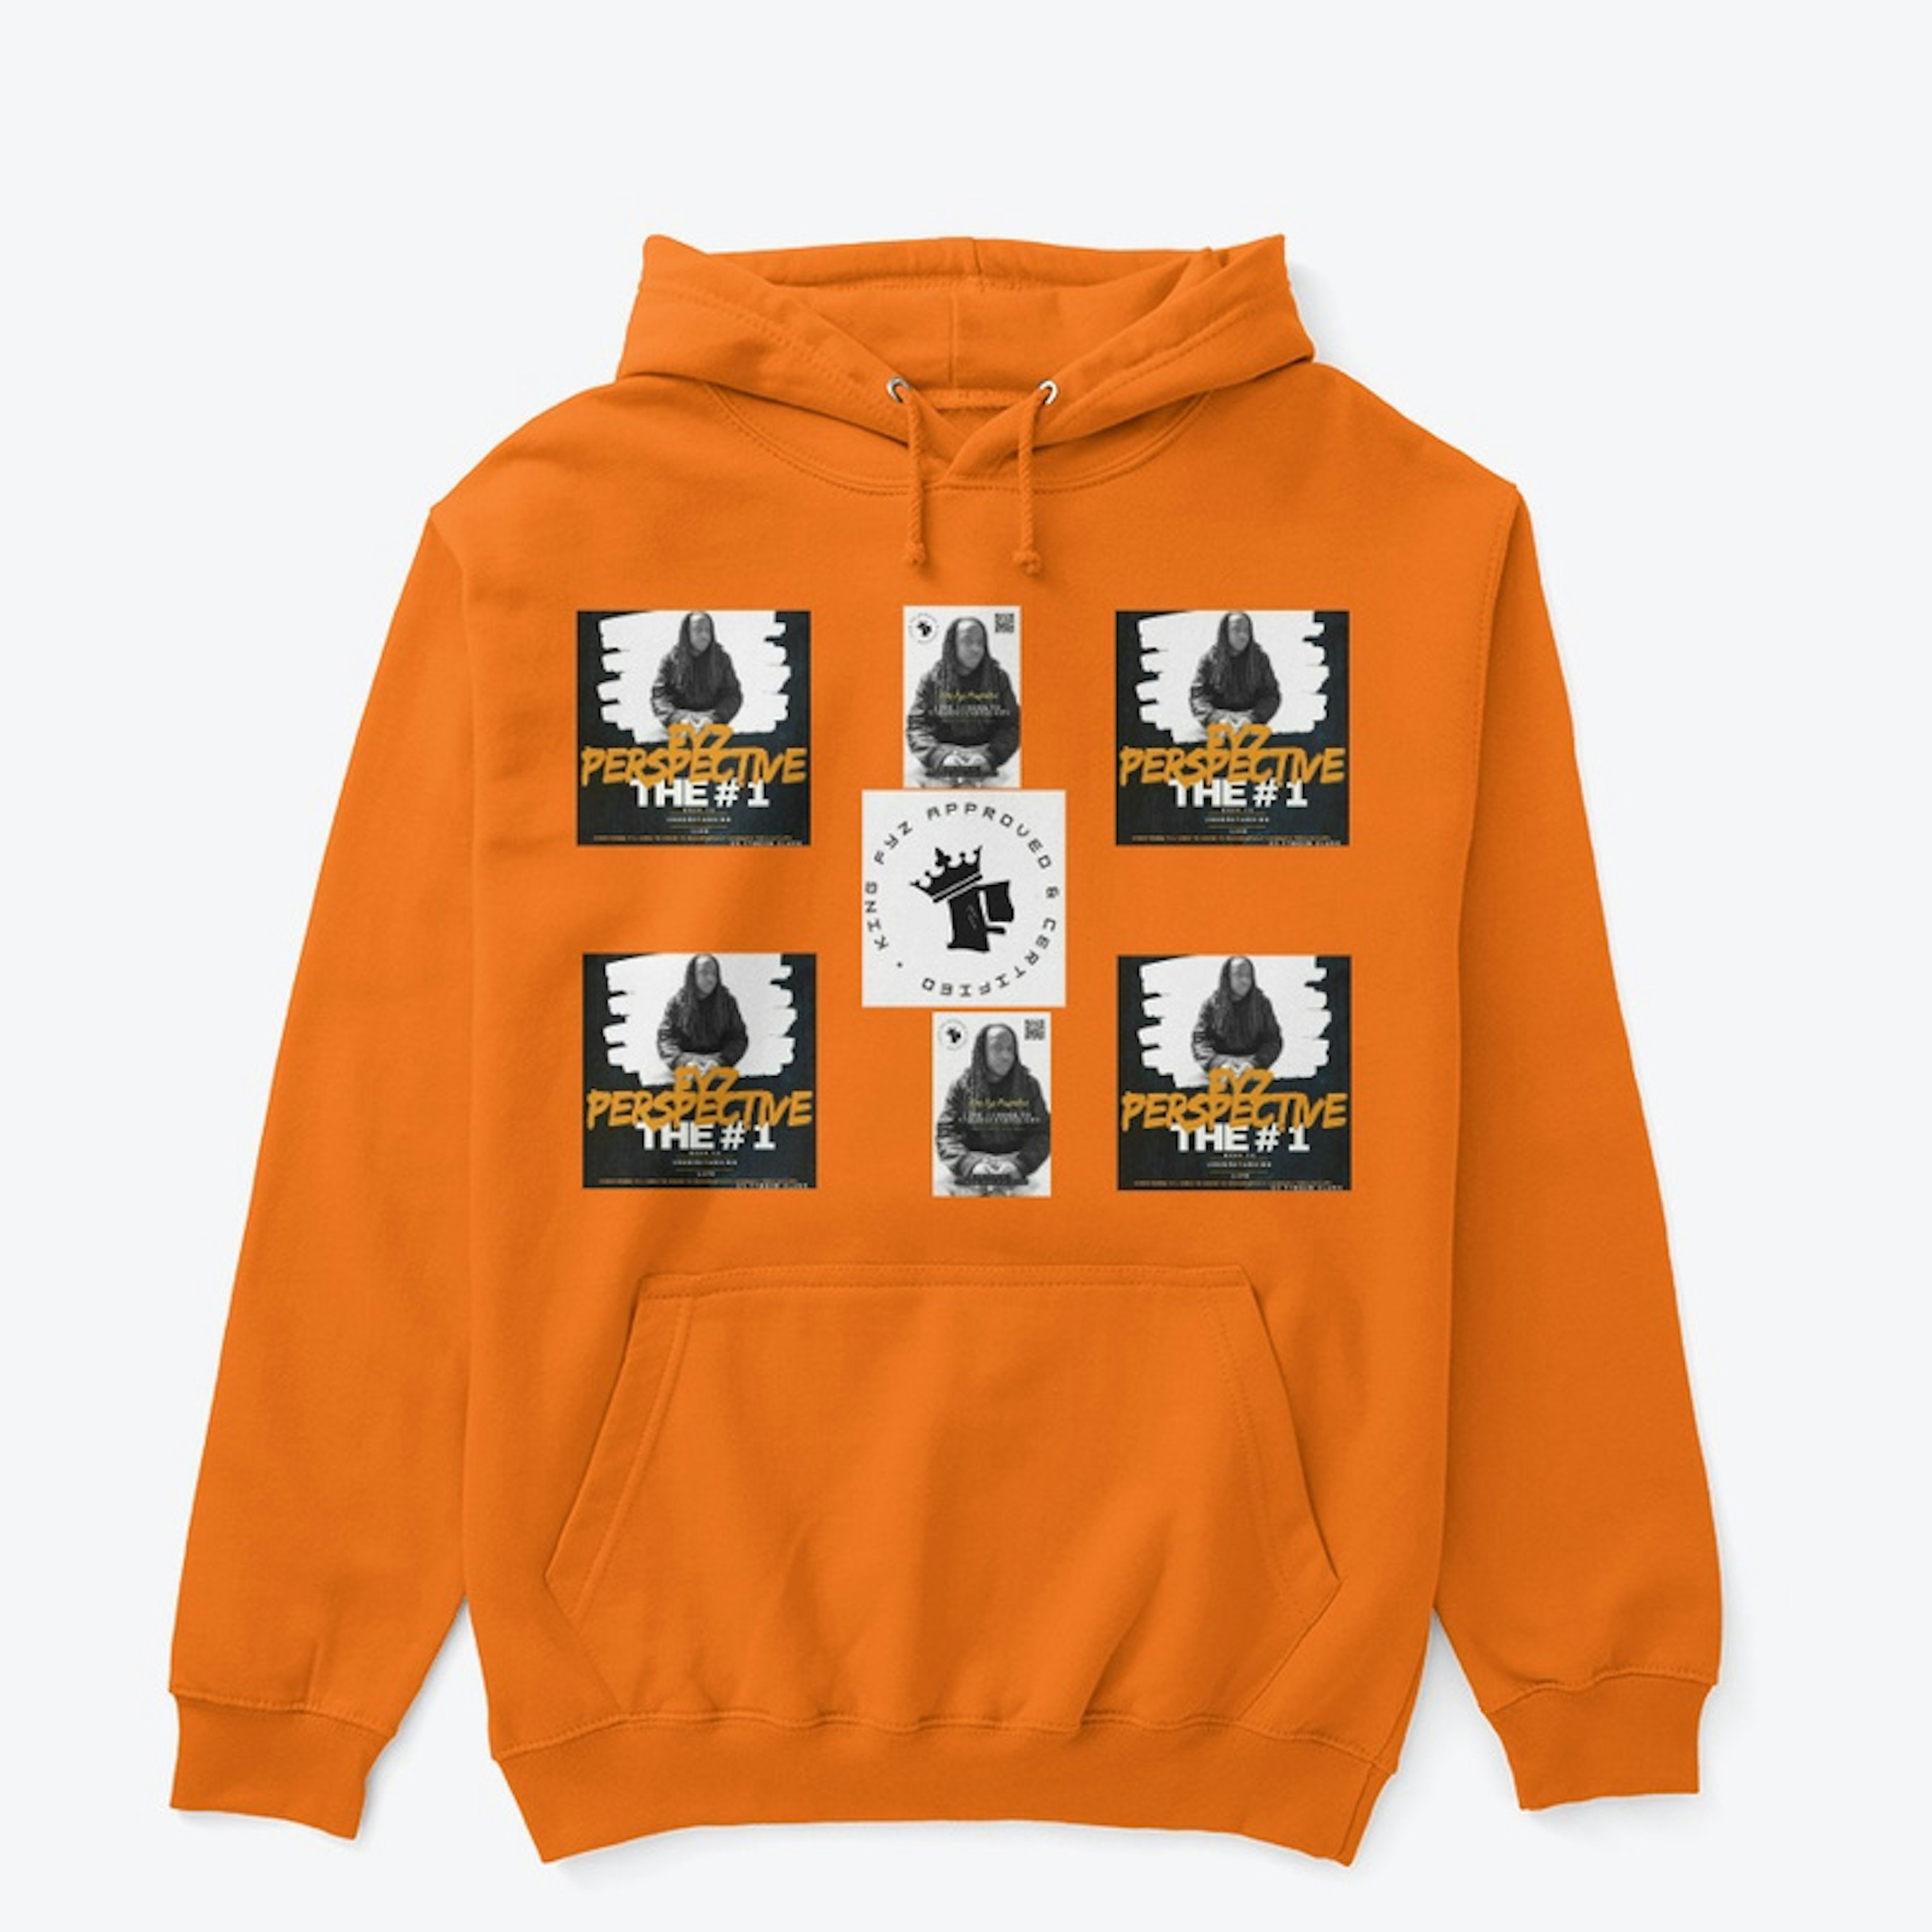 King Fyz Perspective Collage hoodie